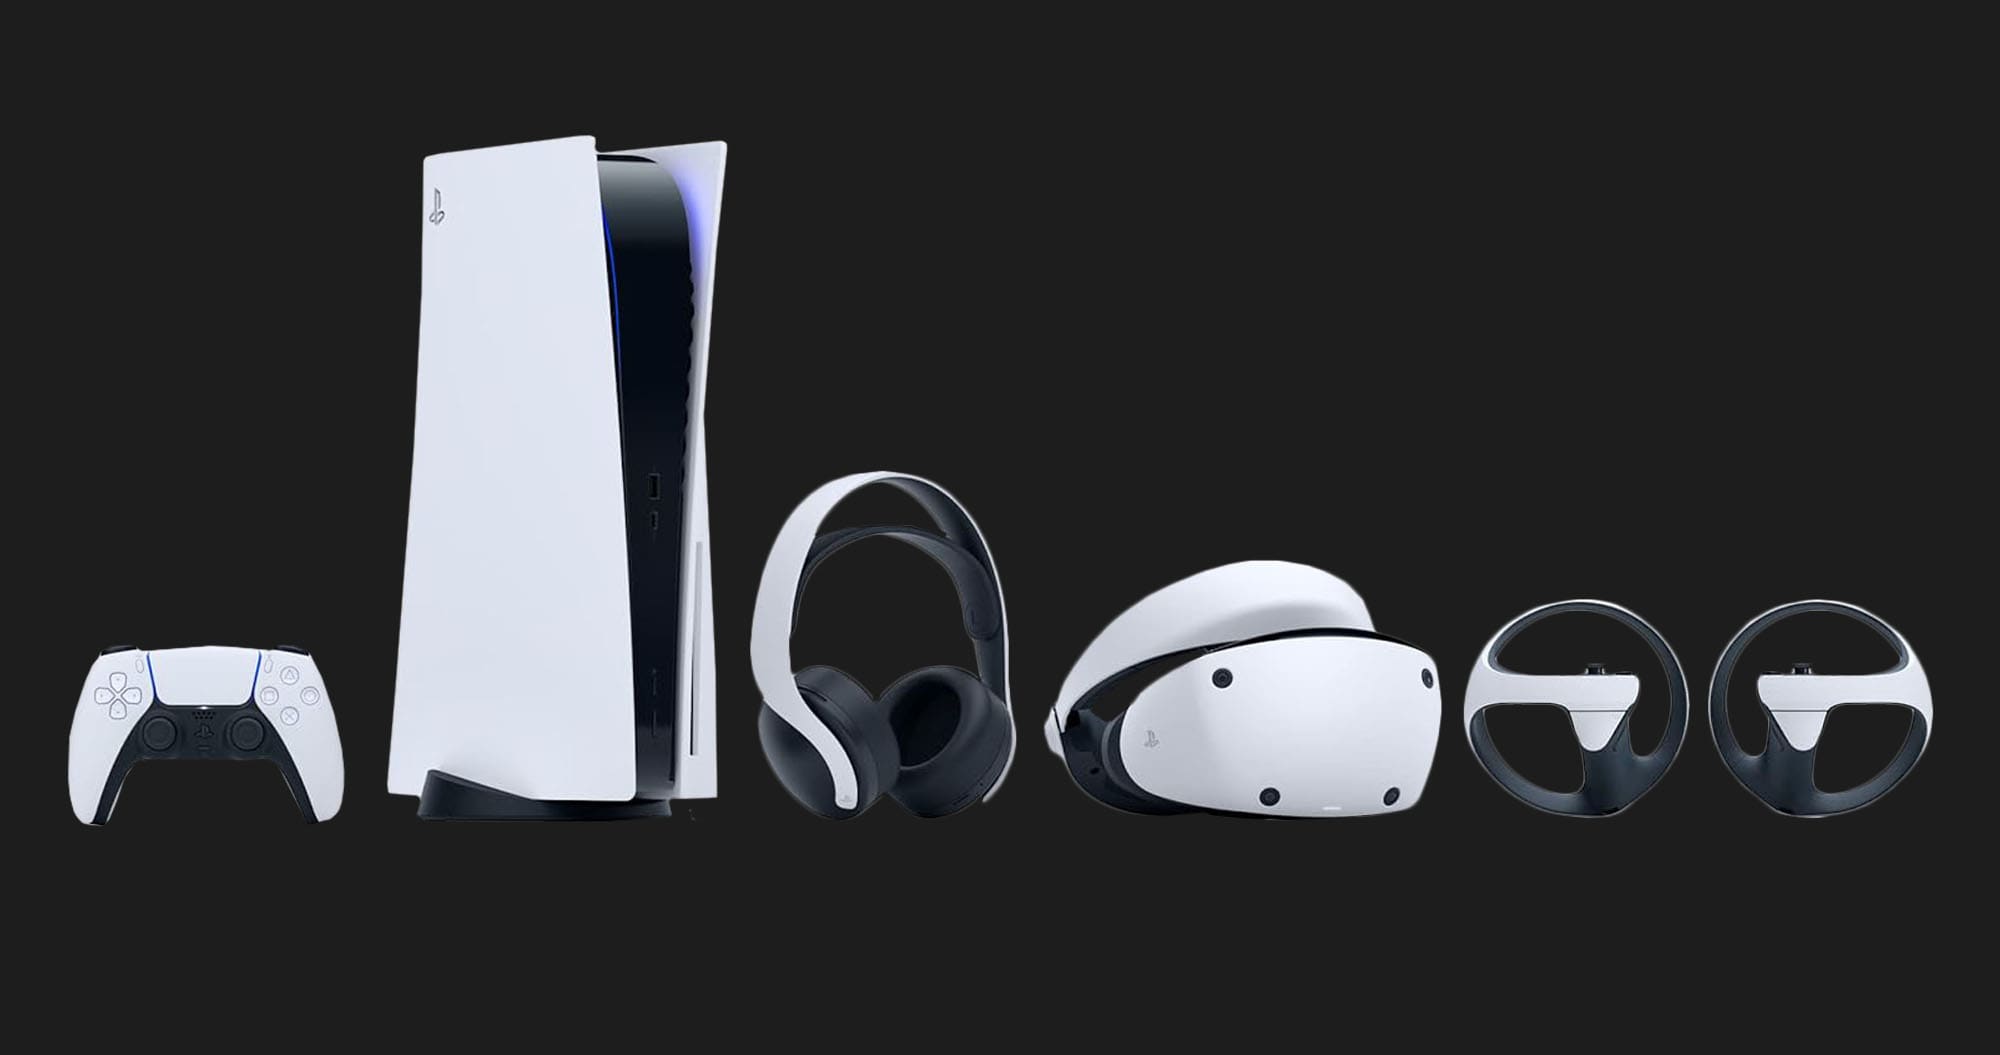 Окуляри віртуальної реальності Sony PlayStation VR2 (PlayStation_VR2)